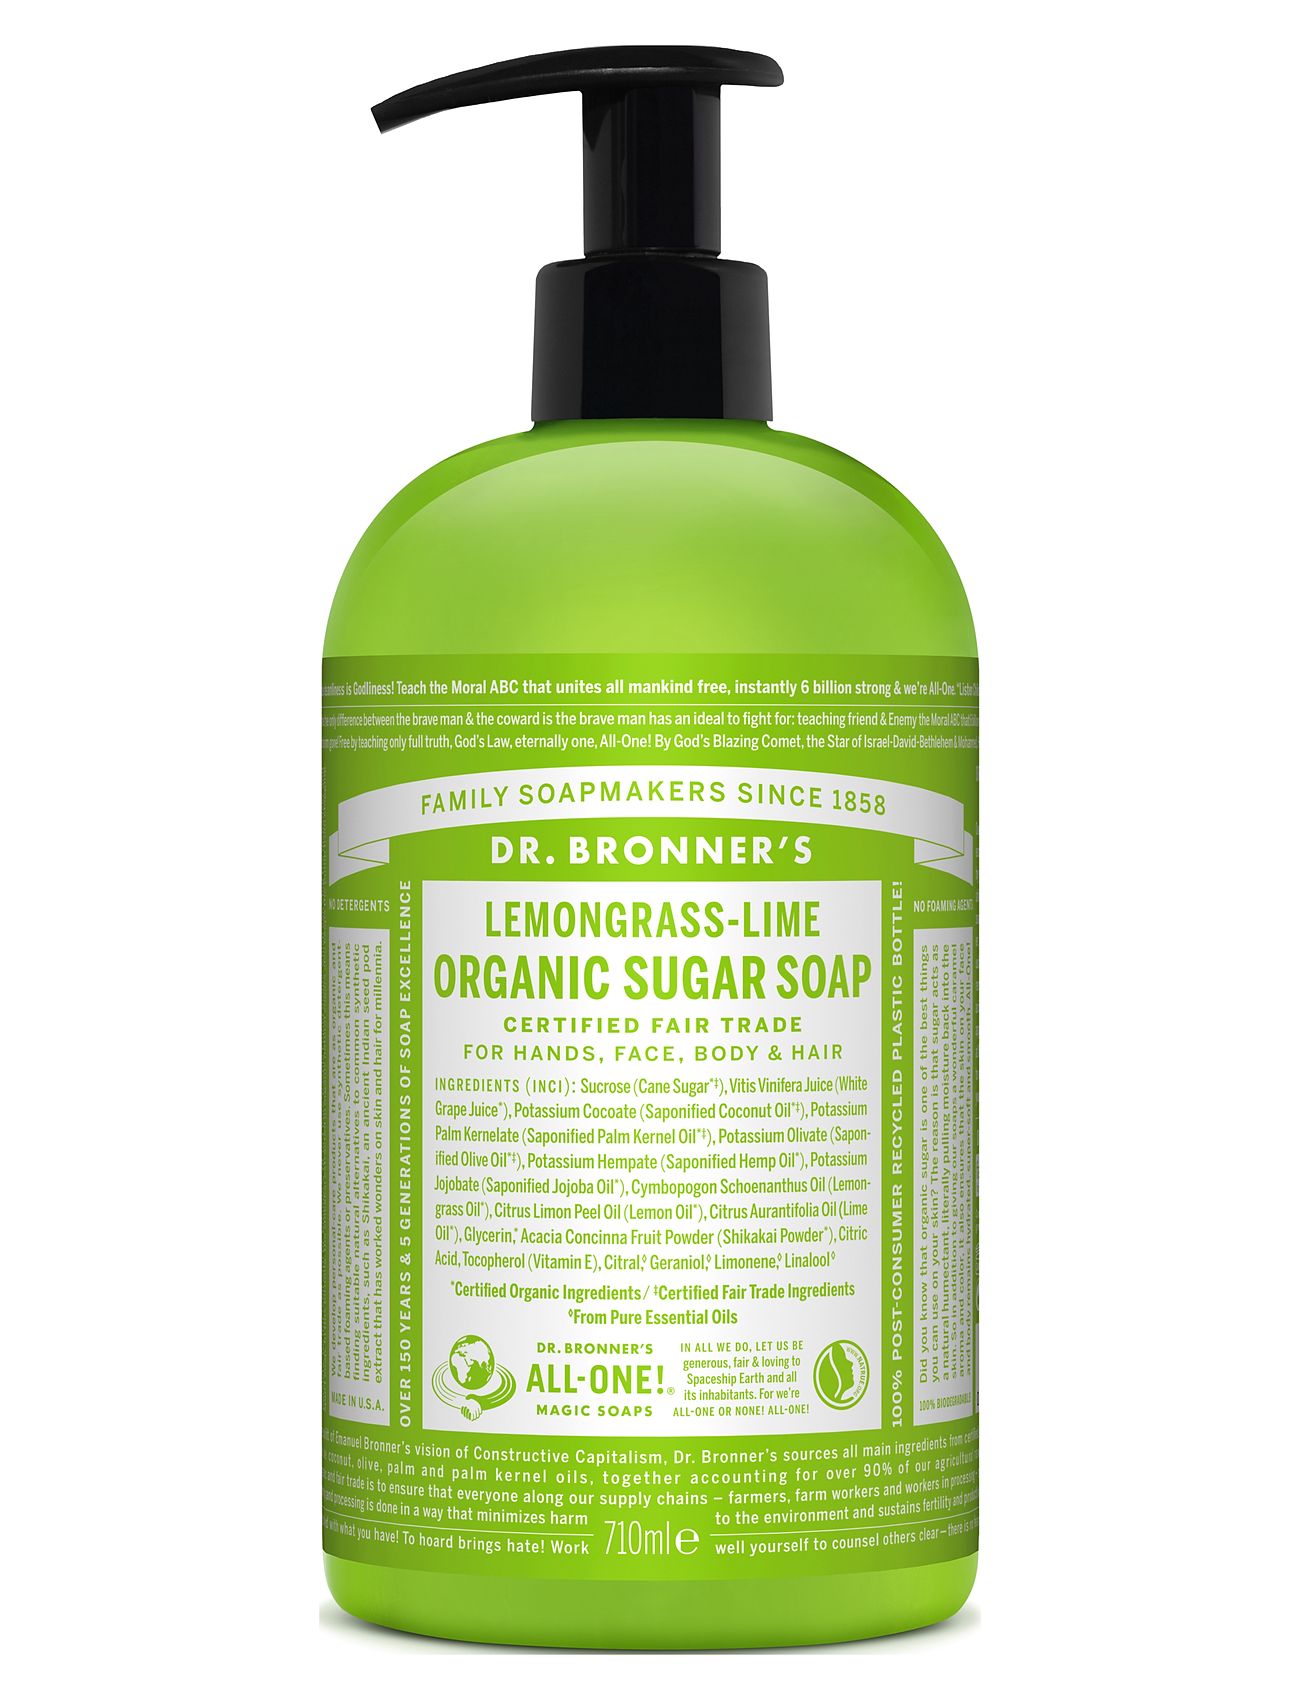 Sugar Soap Lemongrass-Lime Beauty Women Home Hand Soap Liquid Hand Soap Nude Dr. Bronner’s